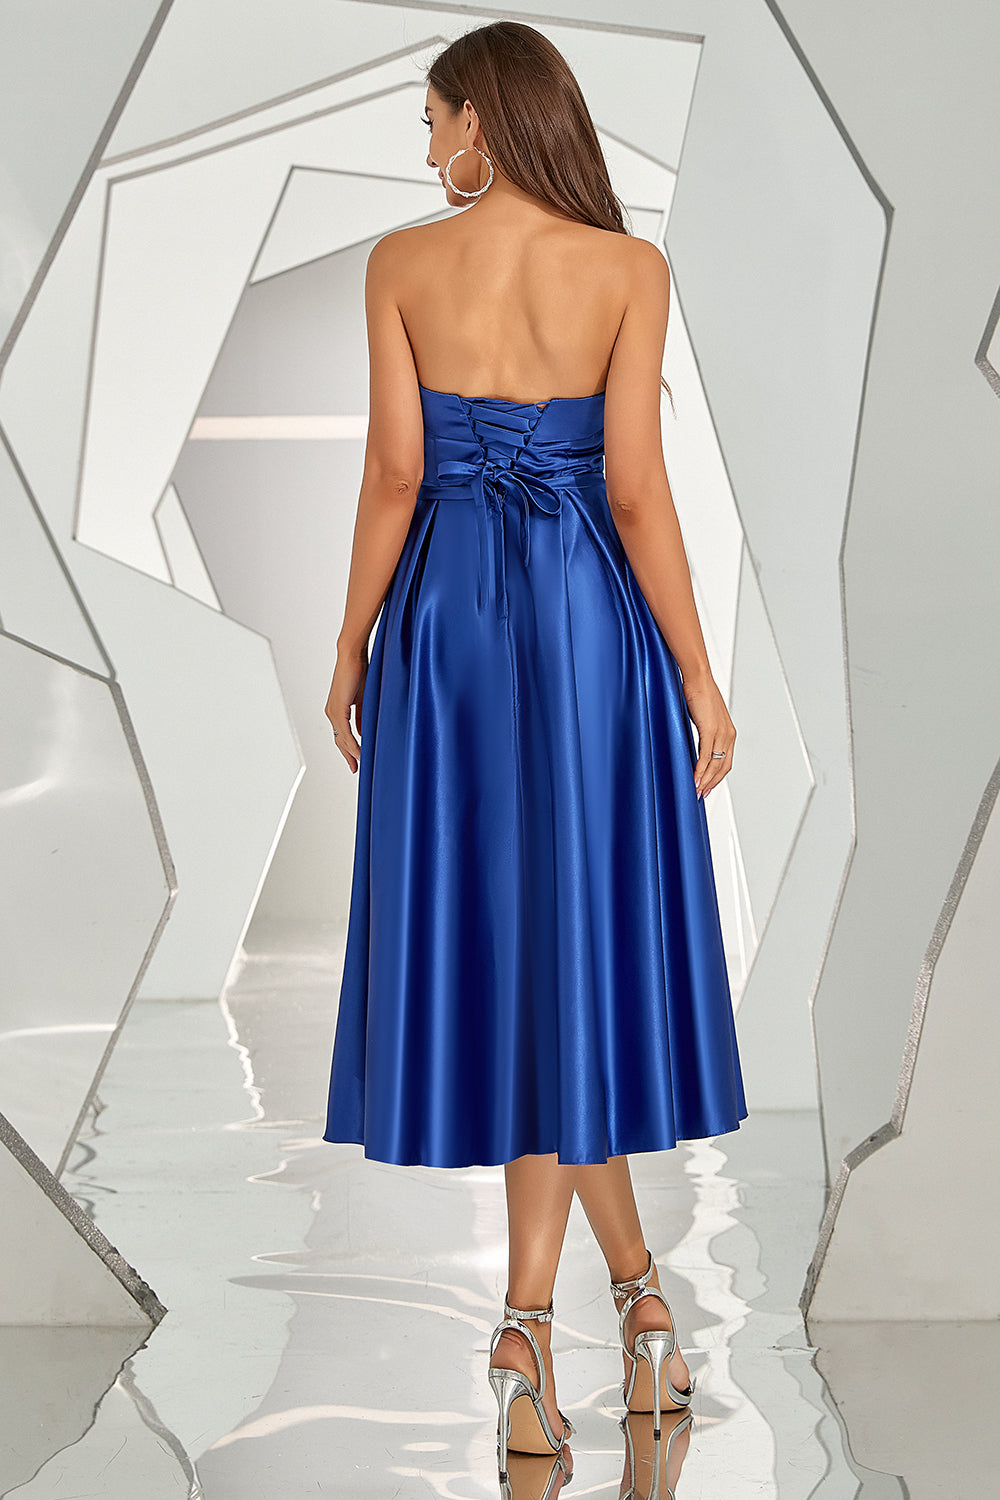 Royal Blue Strapless Cocktail Dress